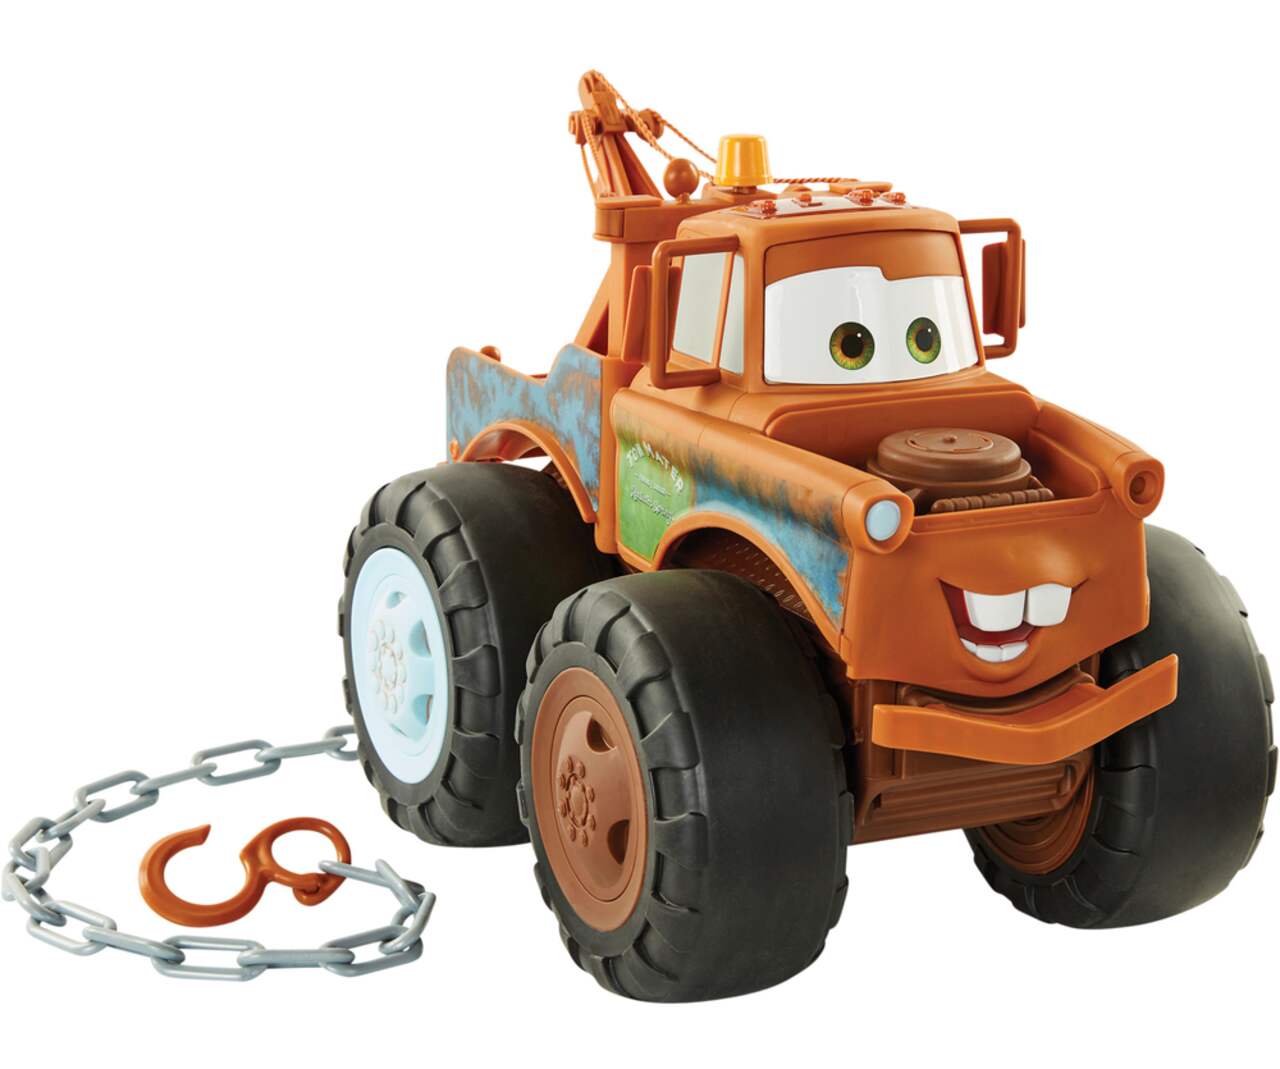 Disney Cars 3 RC Max Tow Mater